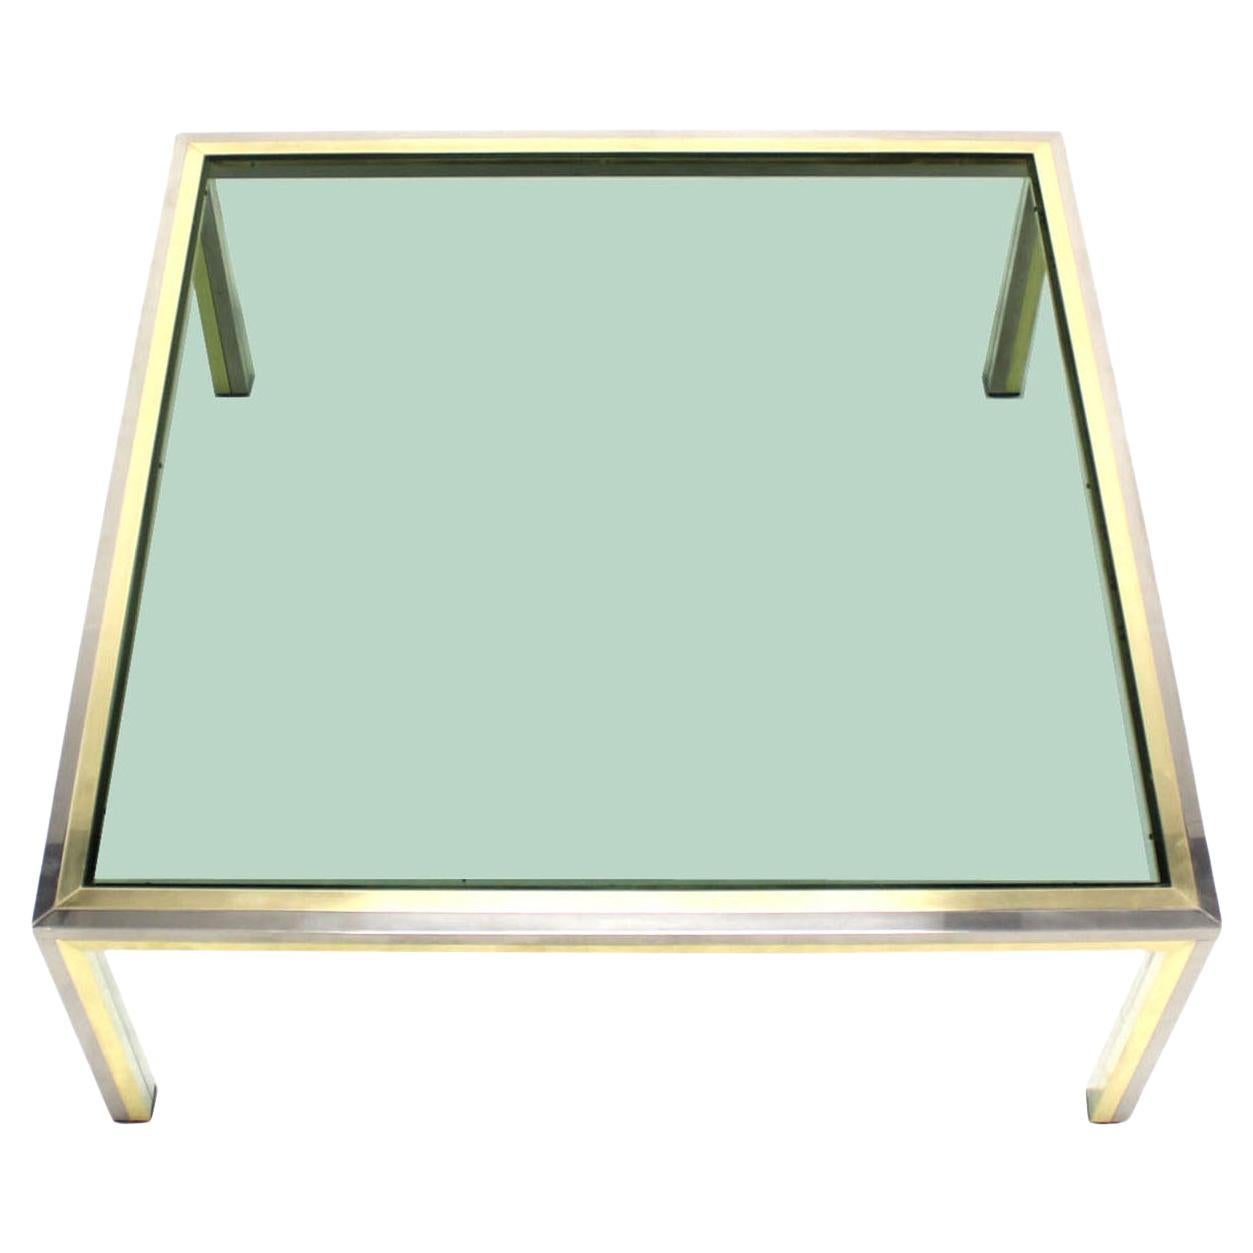 Large 39" Square Brass Chrome Tinted Glass Top Coffee Center Table Romeo Rega 